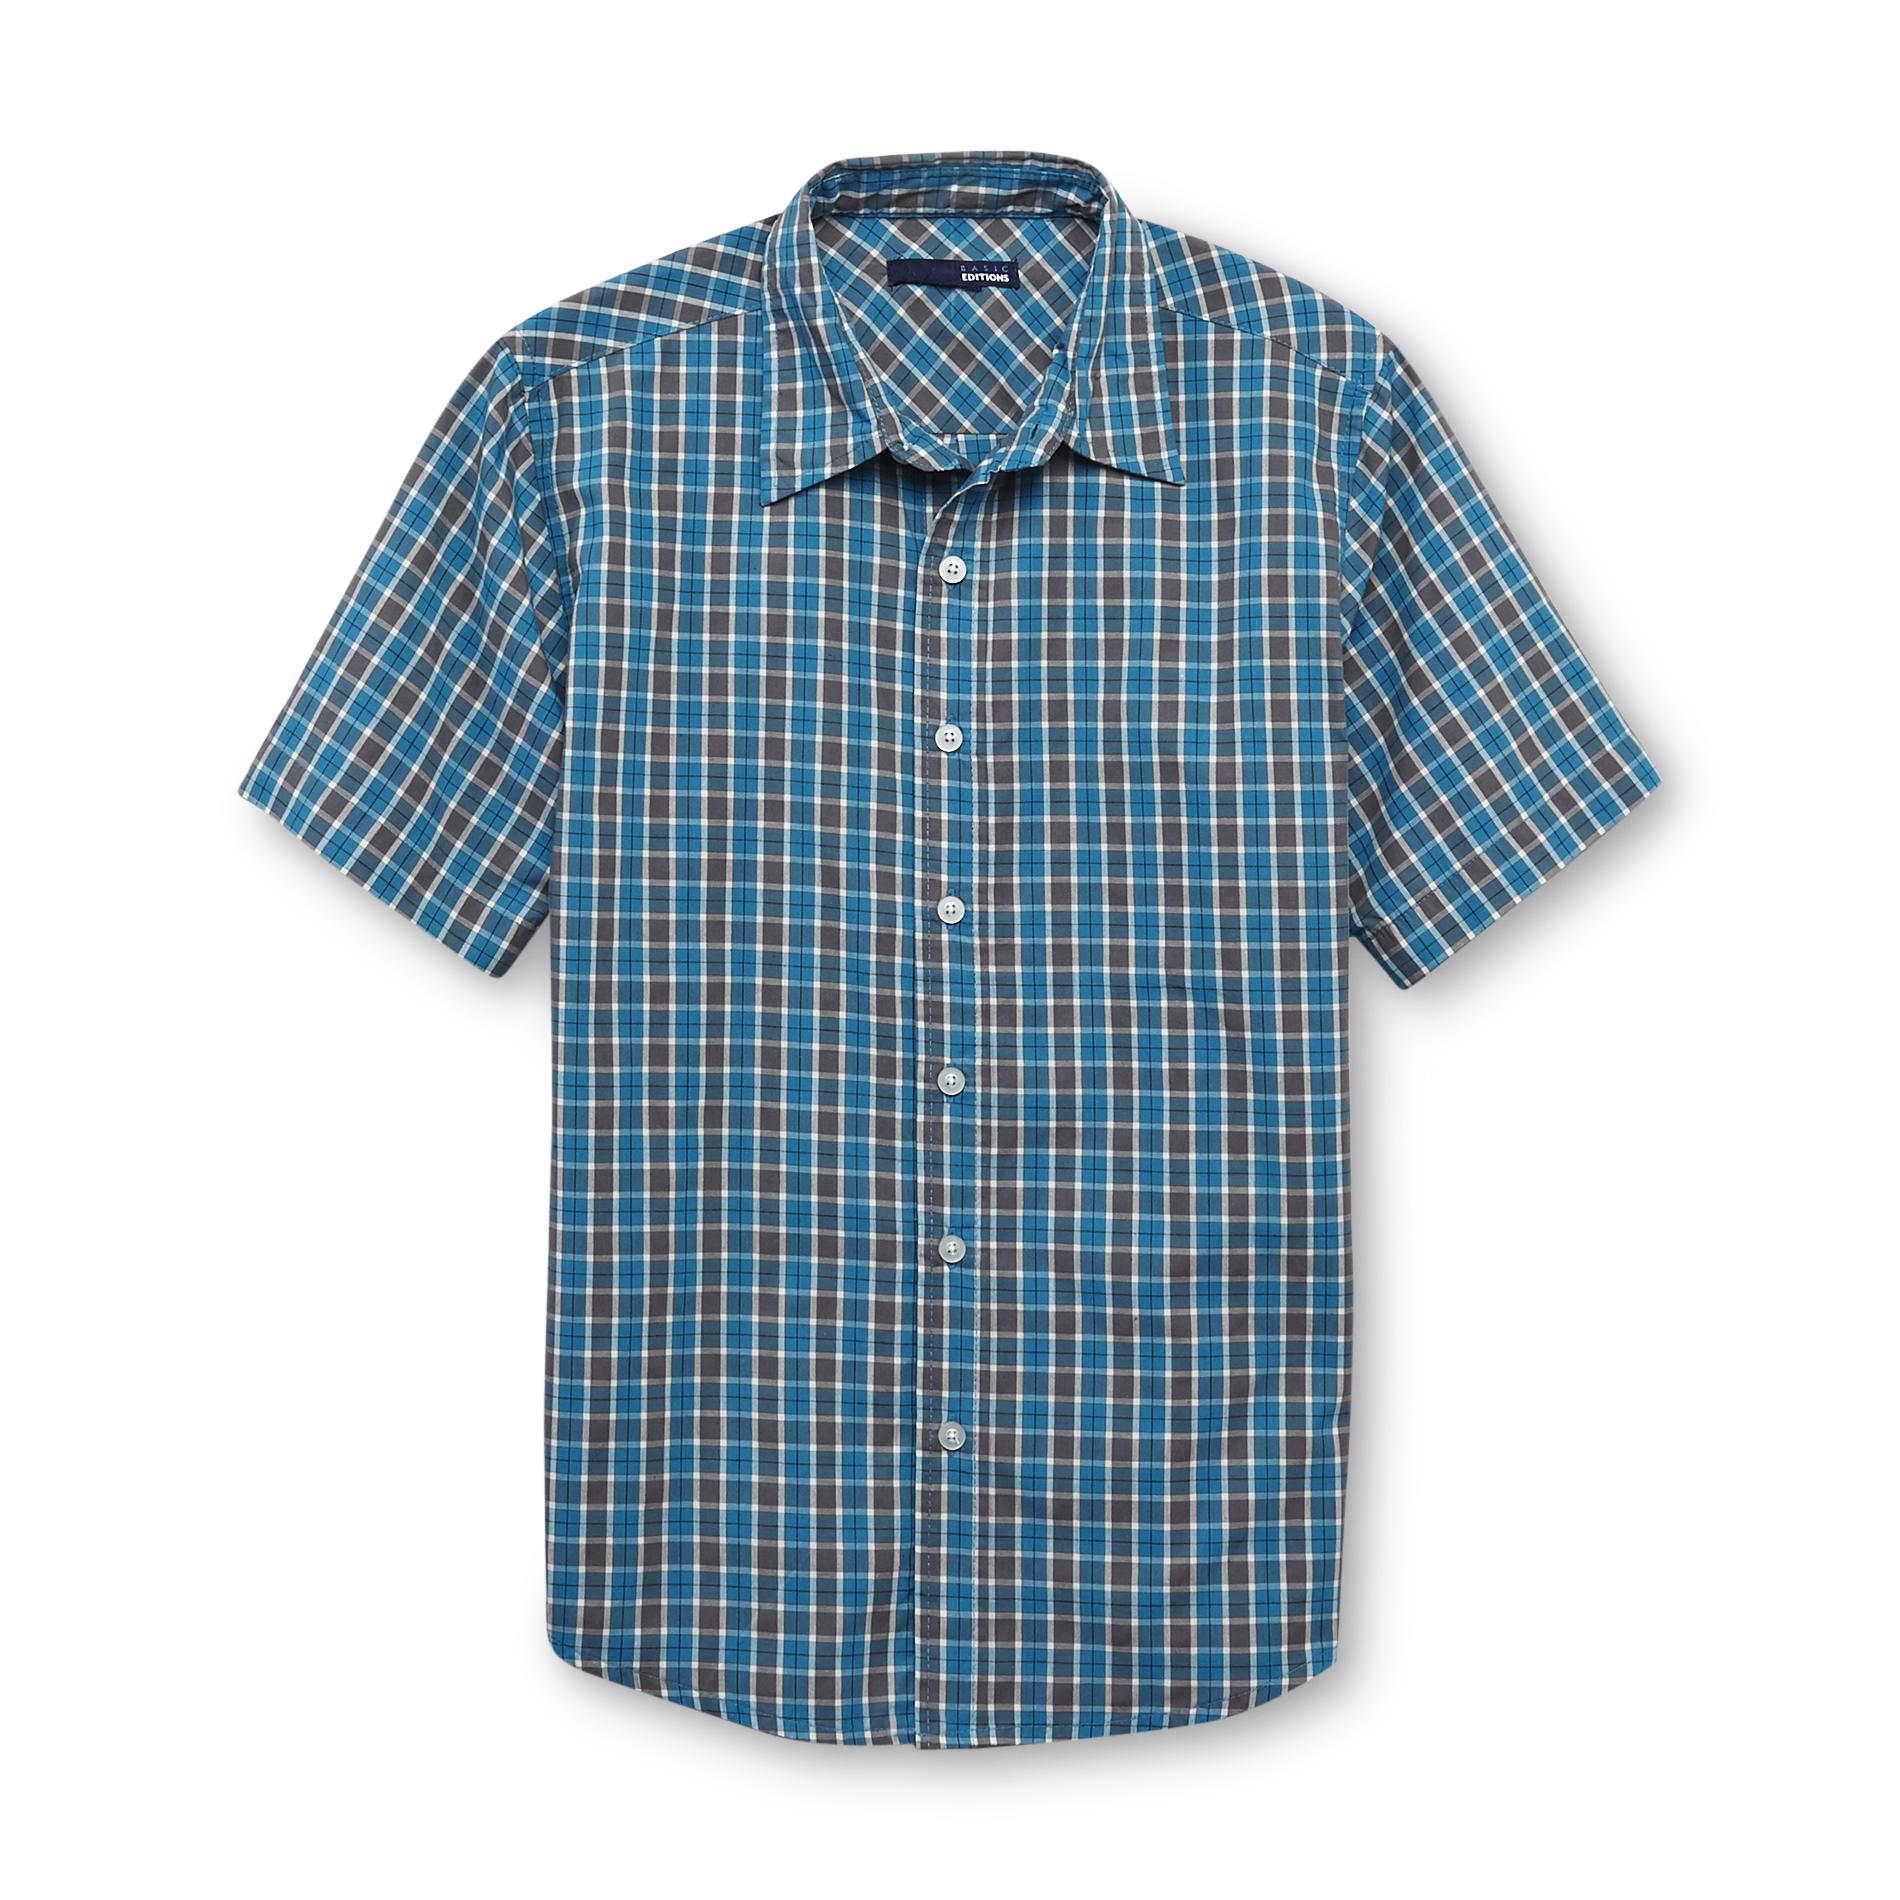 Basic Editions Boy's Short-Sleeve Shirt - Tattersall Plaid